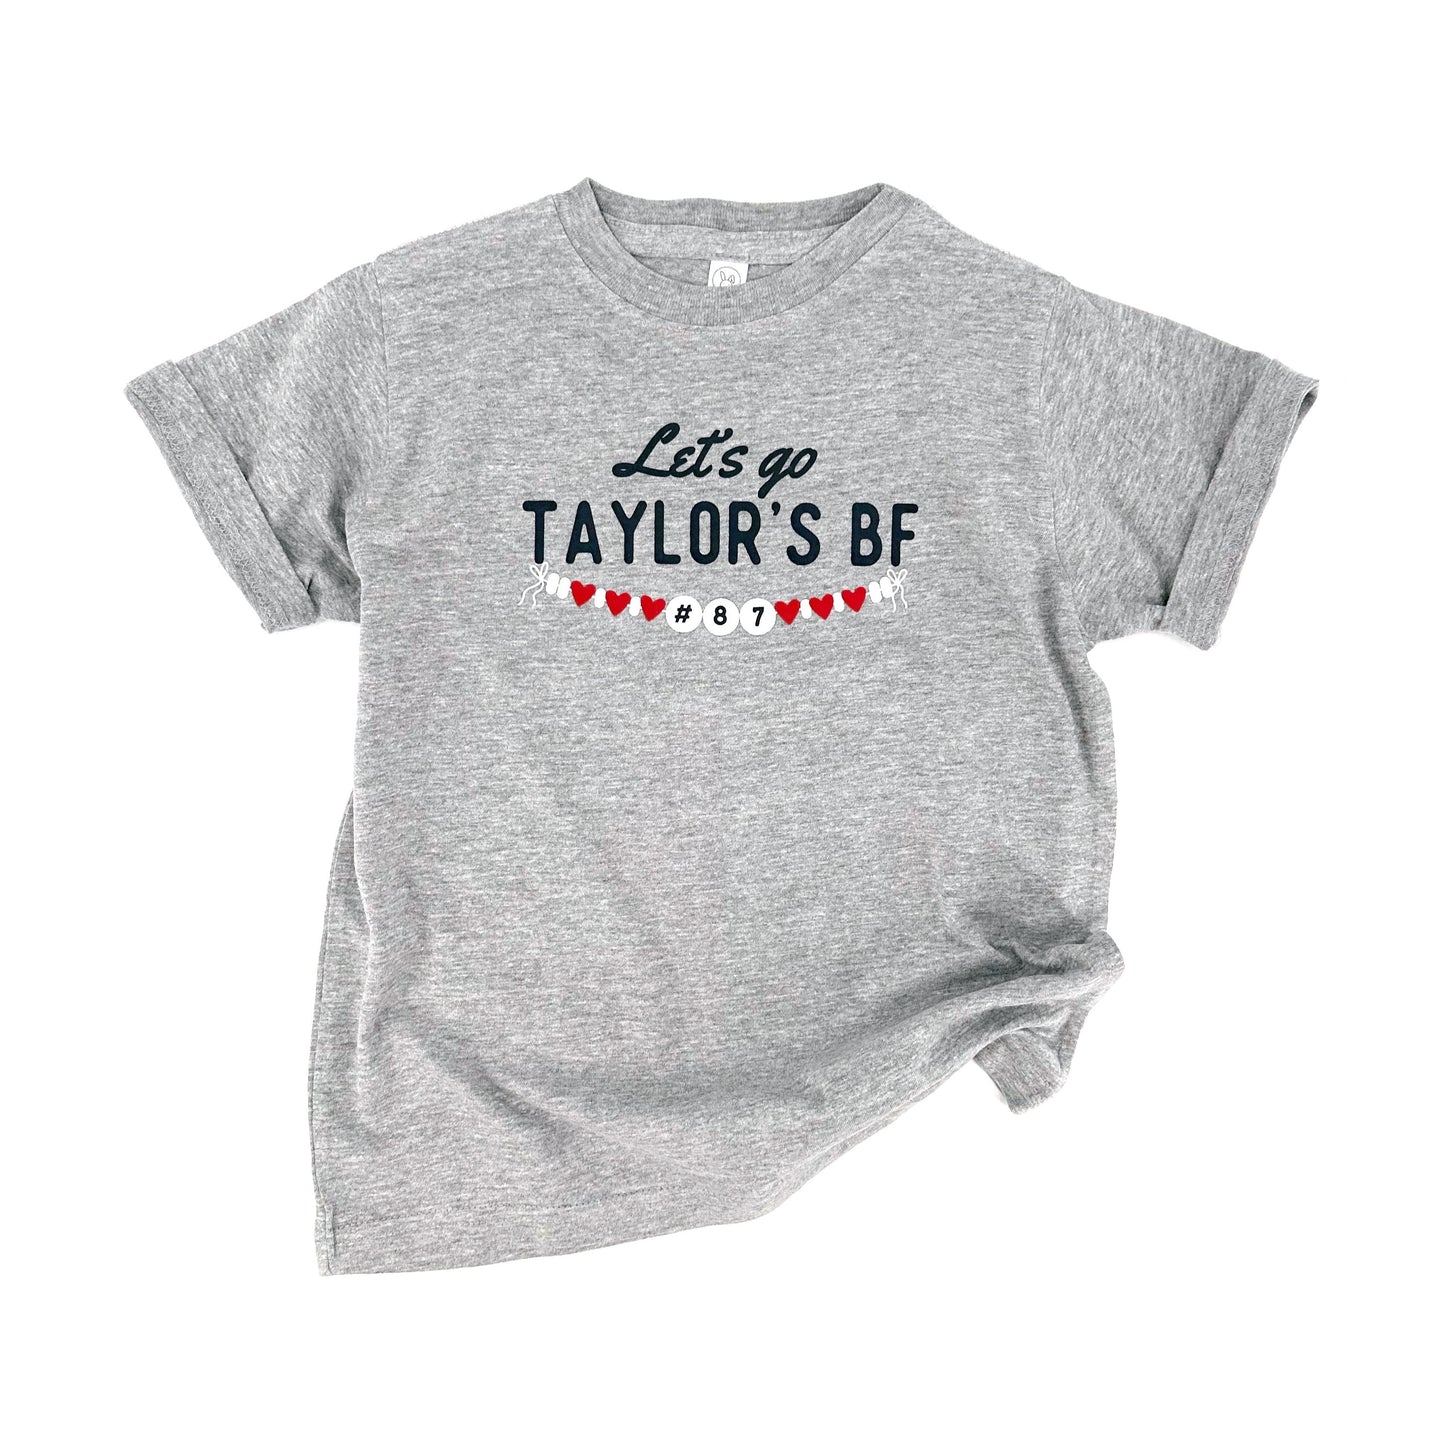 Taylor’s BF TEE shirt!